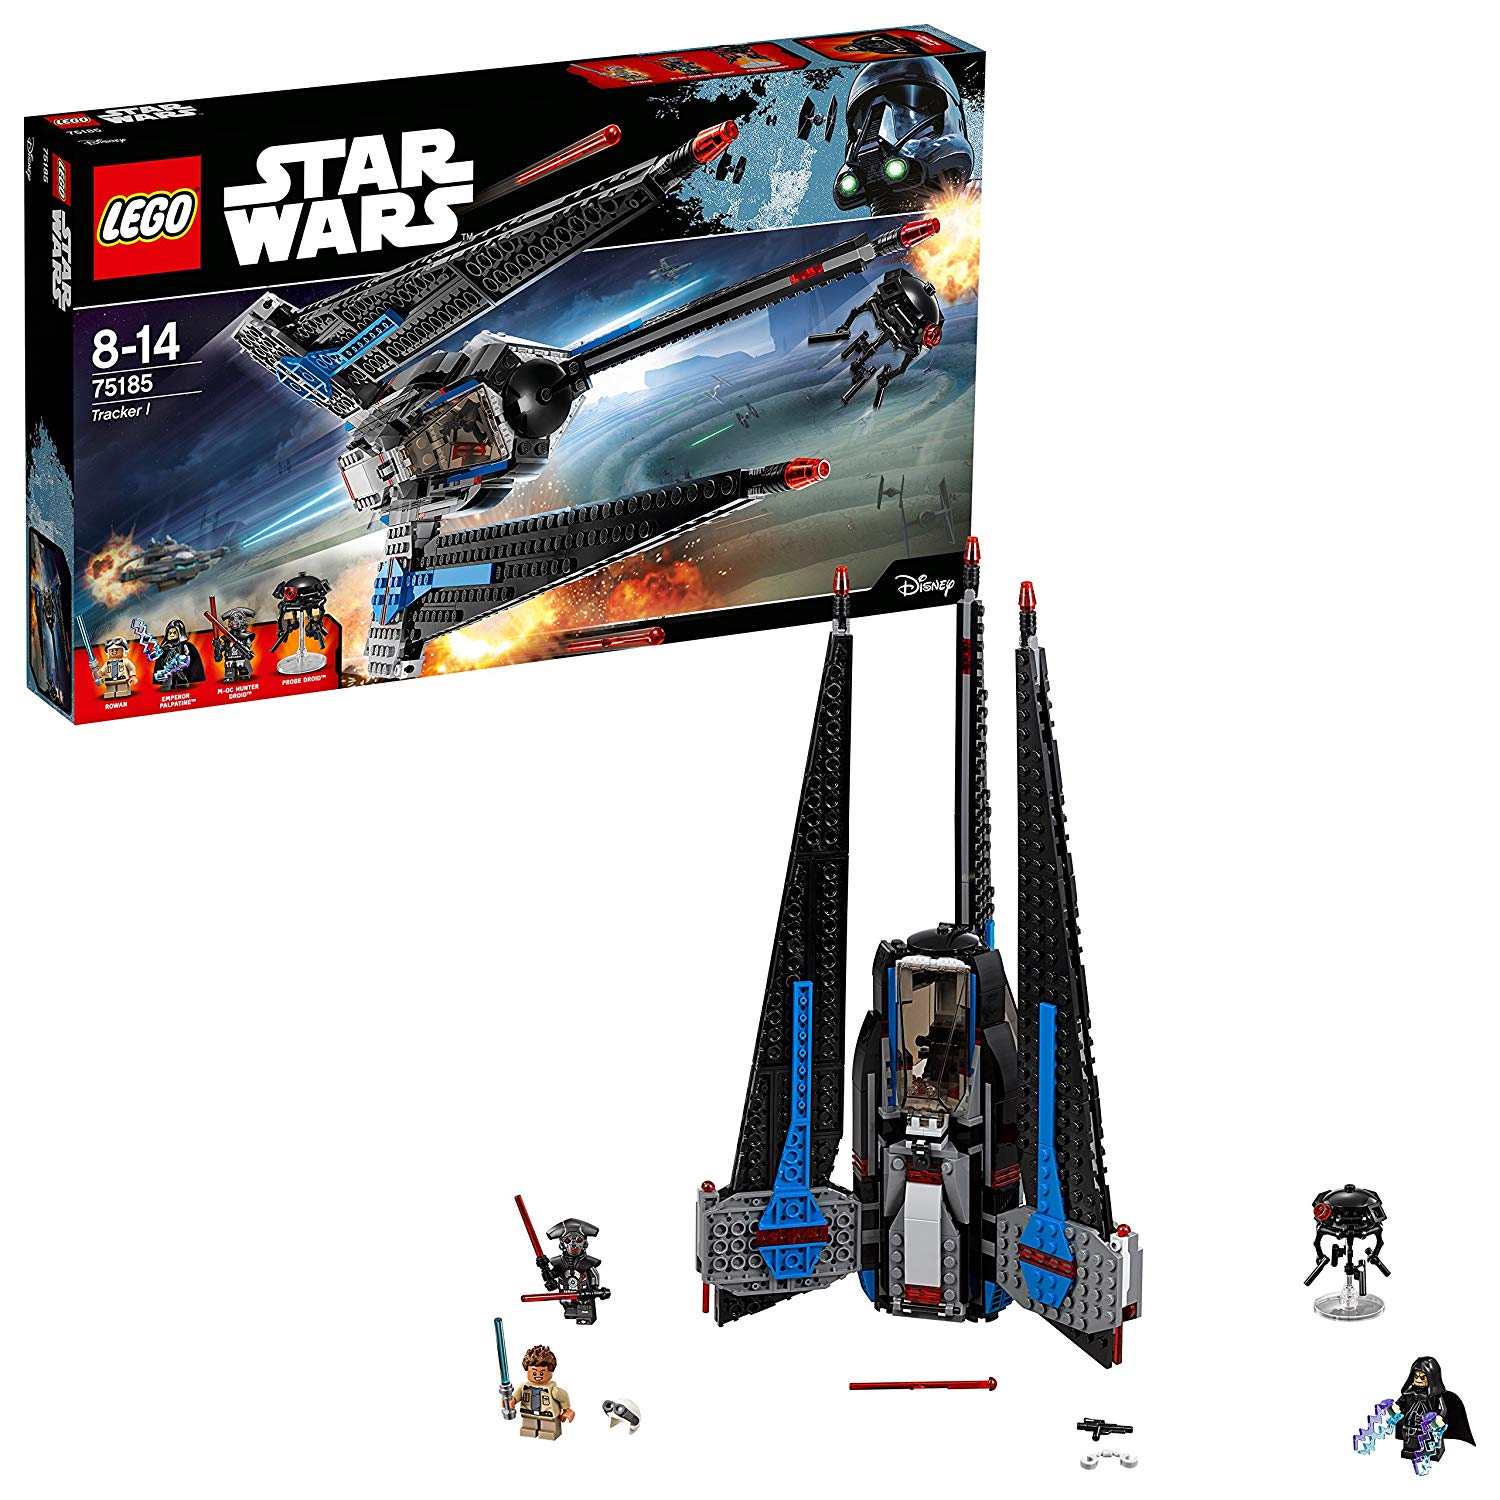 Lego Star Wars Tracker I Star Wars Spaceship Toy